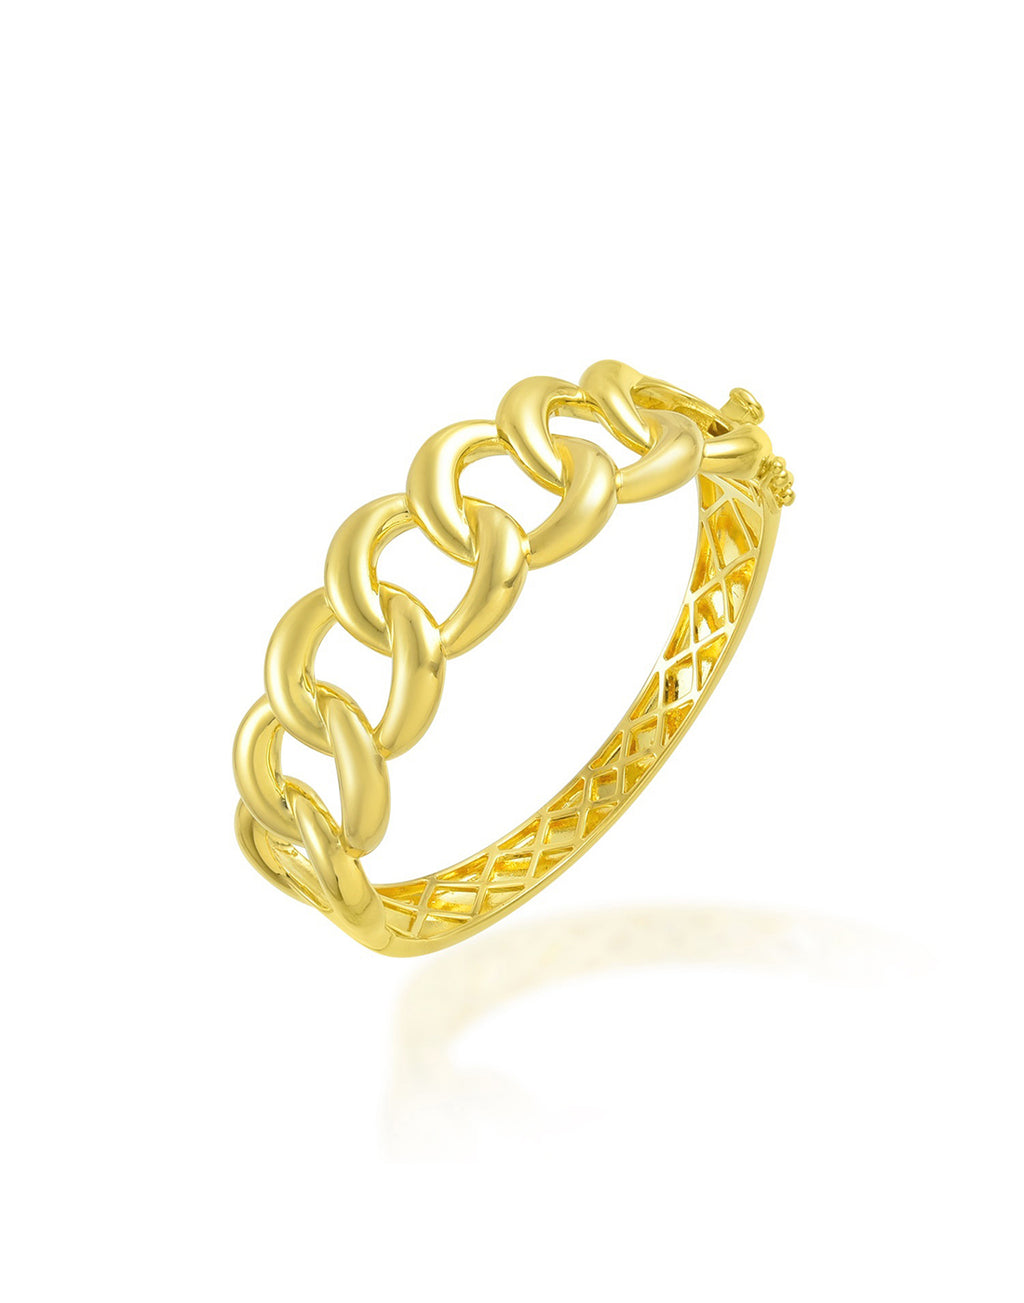 Link Chain Bracelet - Statement Bracelets & Cuffs - Gold-Plated & Hypoallergenic Jewellery - Made in India - Dubai Jewellery - Dori